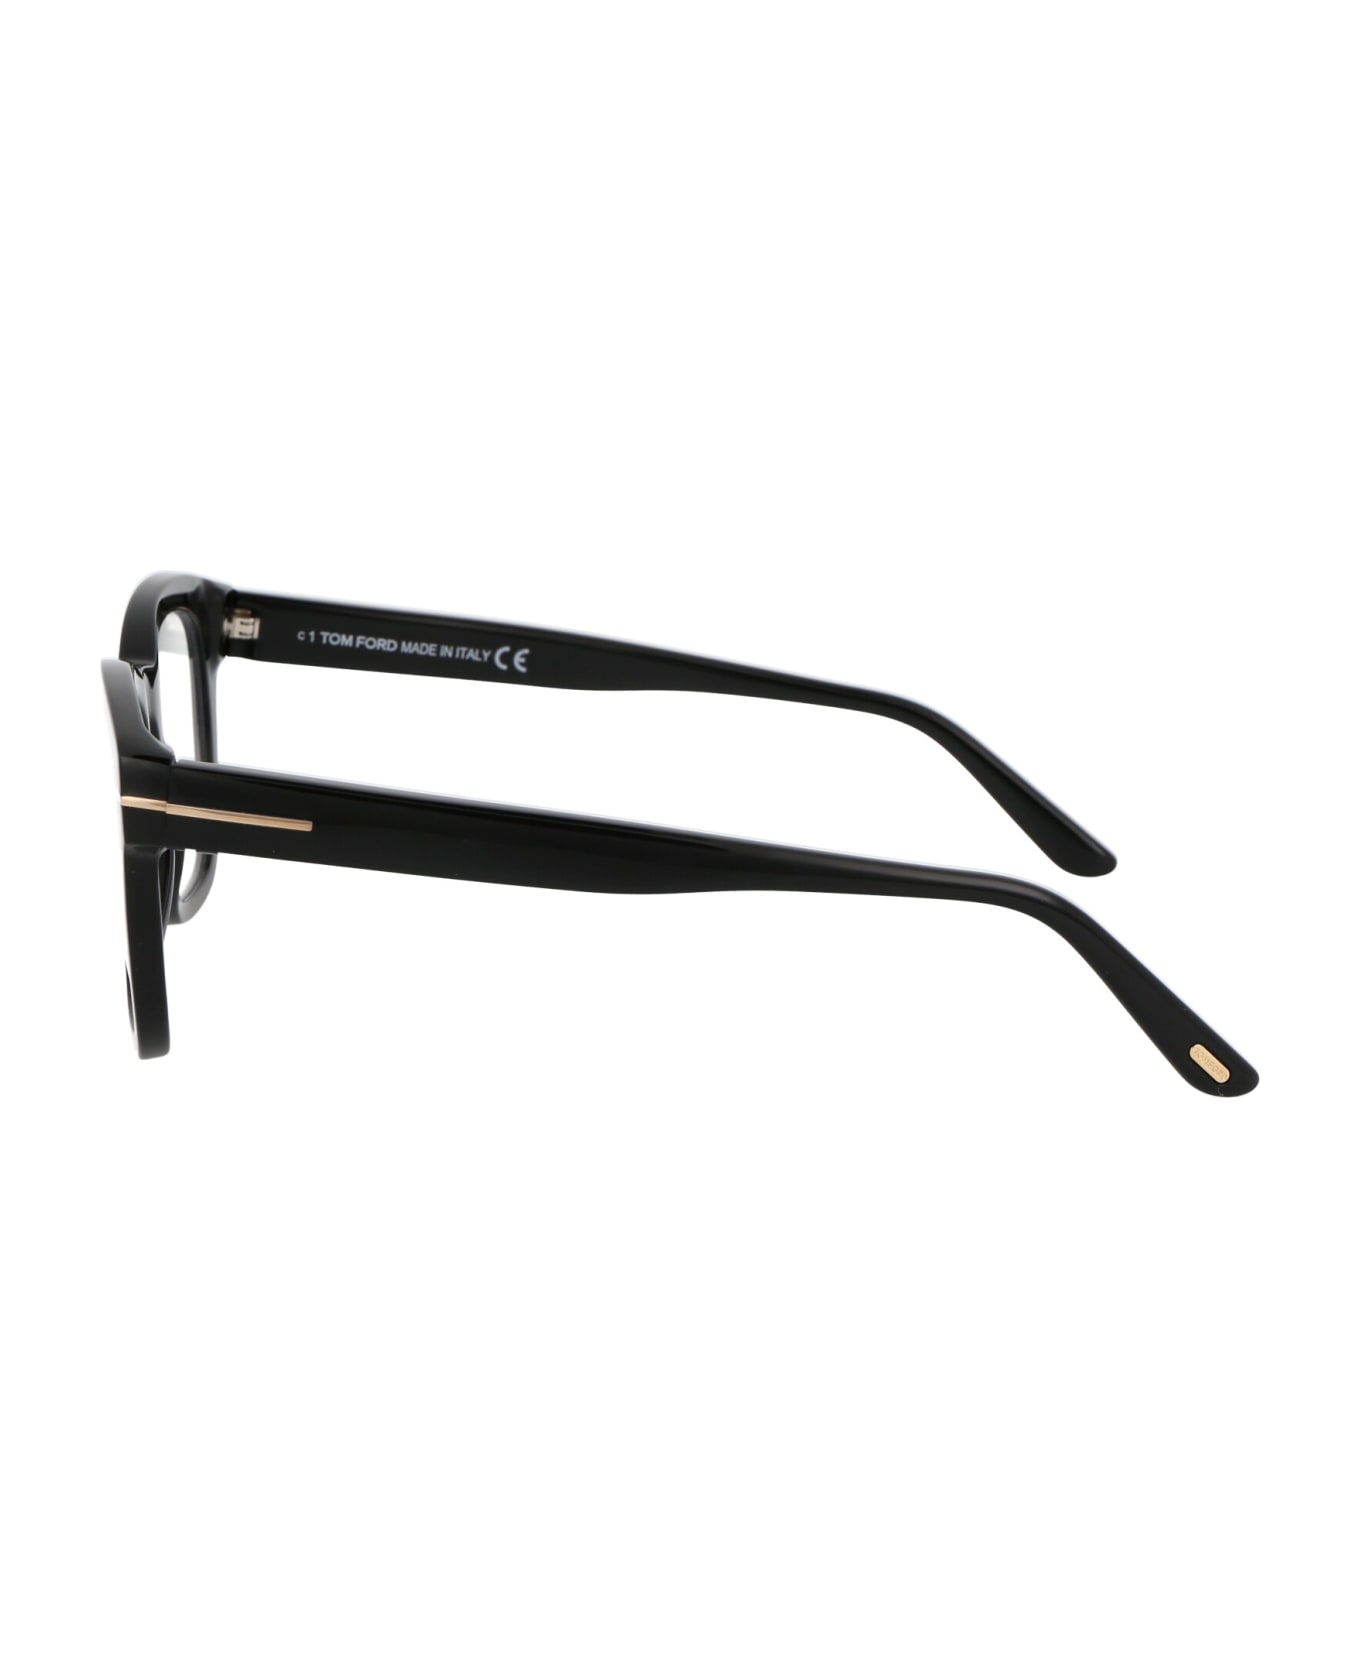 Tom Ford Eyewear Ft5542-b Glasses - 001 Nero Lucido アイウェア